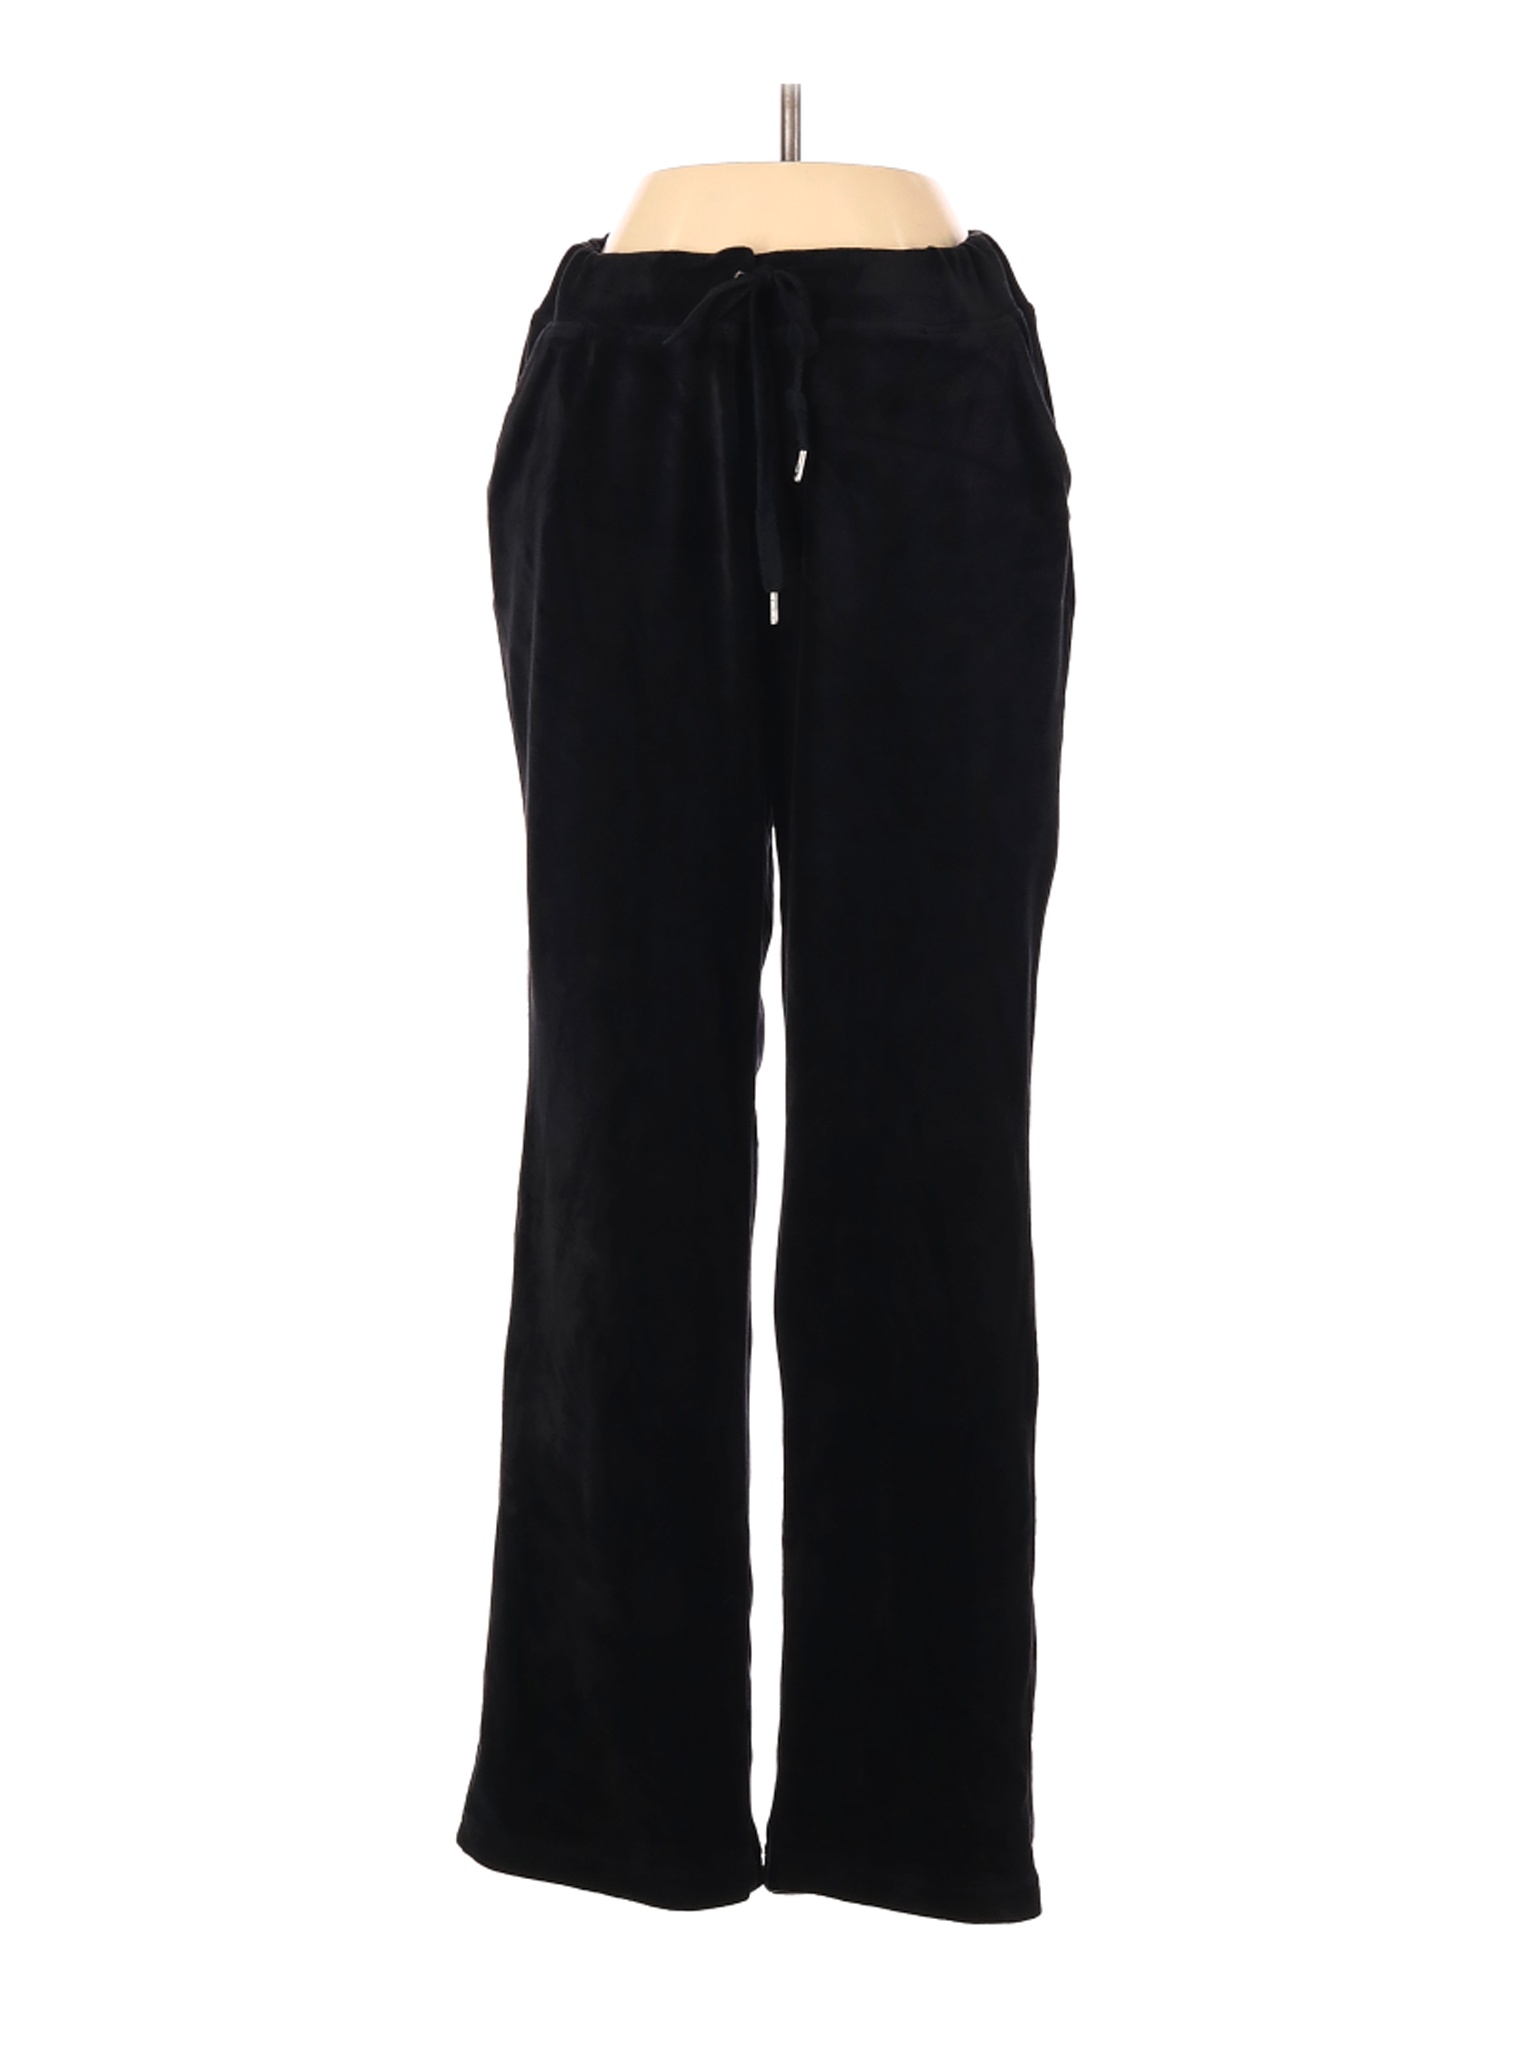 Gloria Vanderbilt Women Black Velour Pants S | eBay